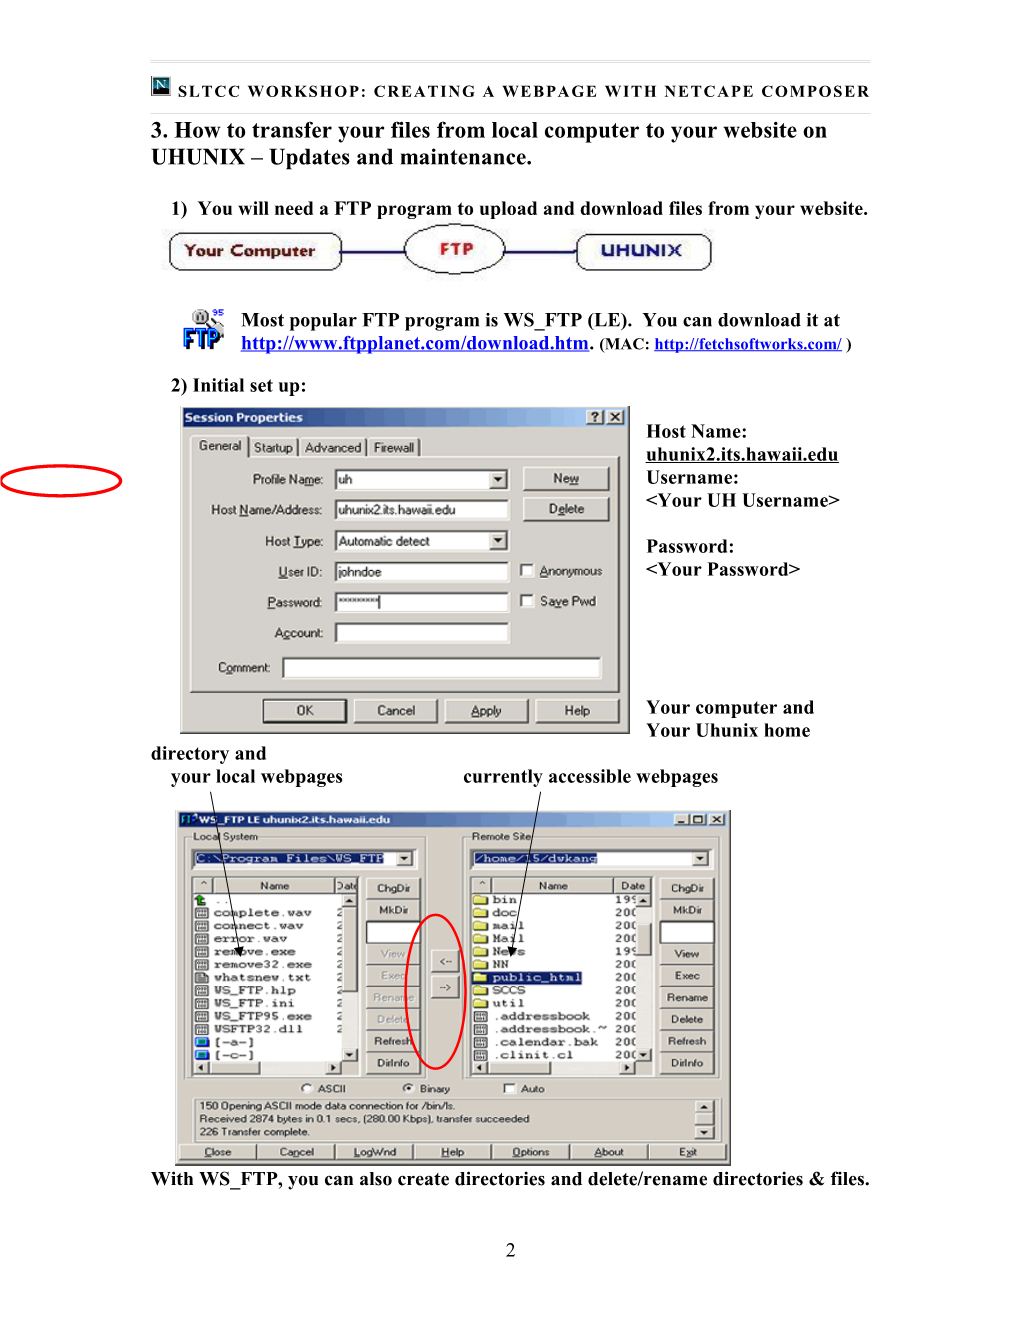 1) Commercial HTML Editors: Dreamweaver MX, Frontpage 2002